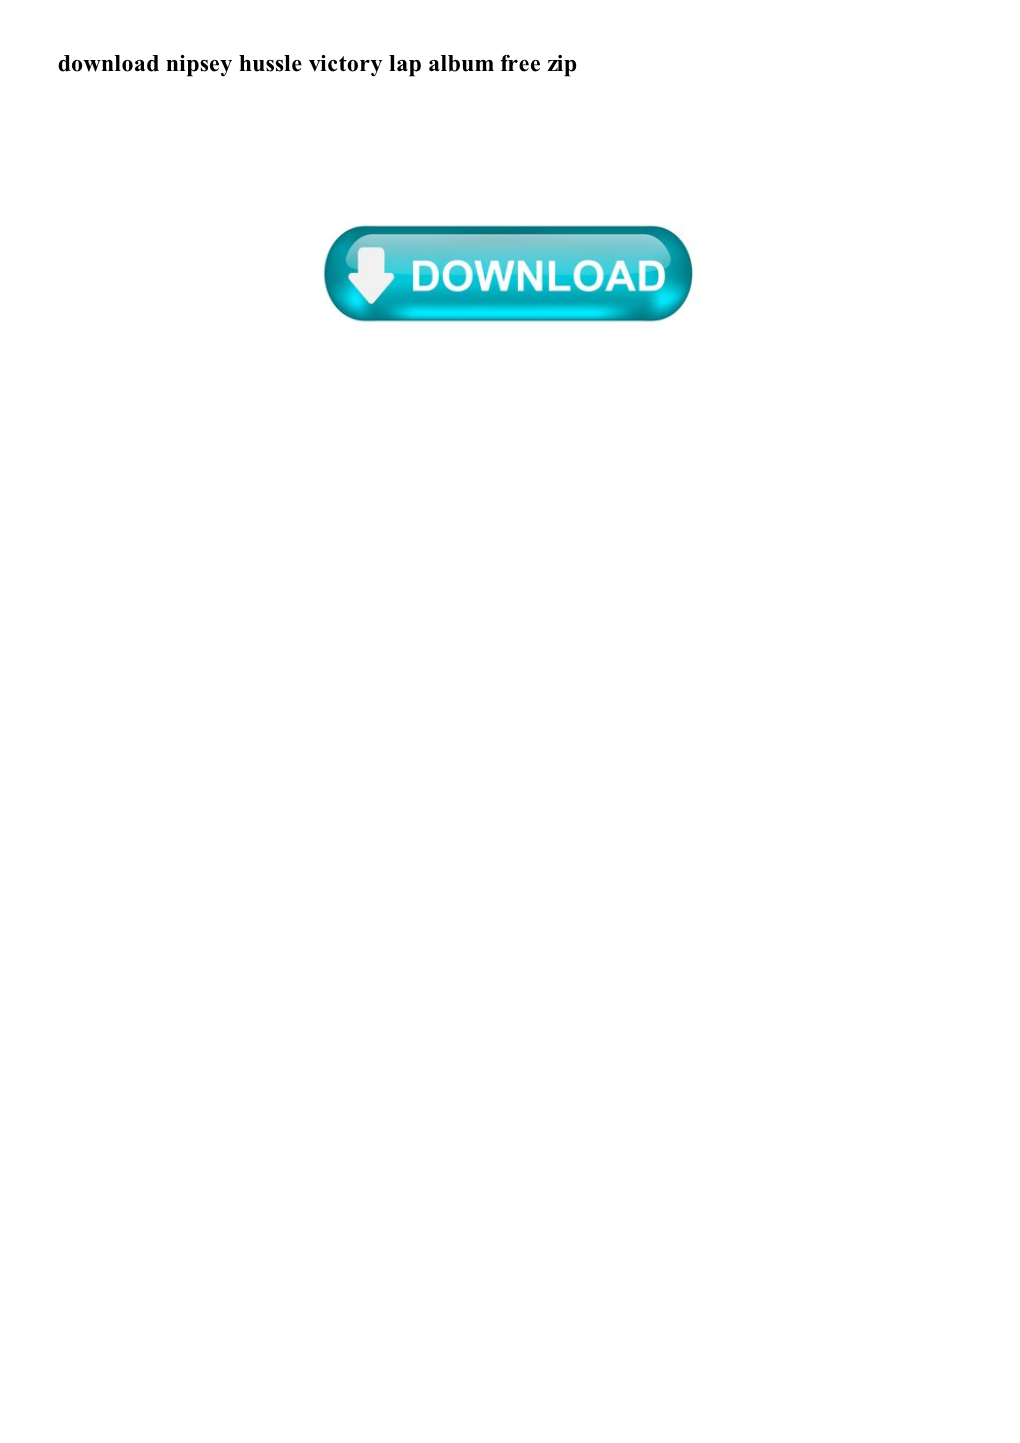 Download Nipsey Hussle Victory Lap Album Free Zip Prostudiomasters.Com